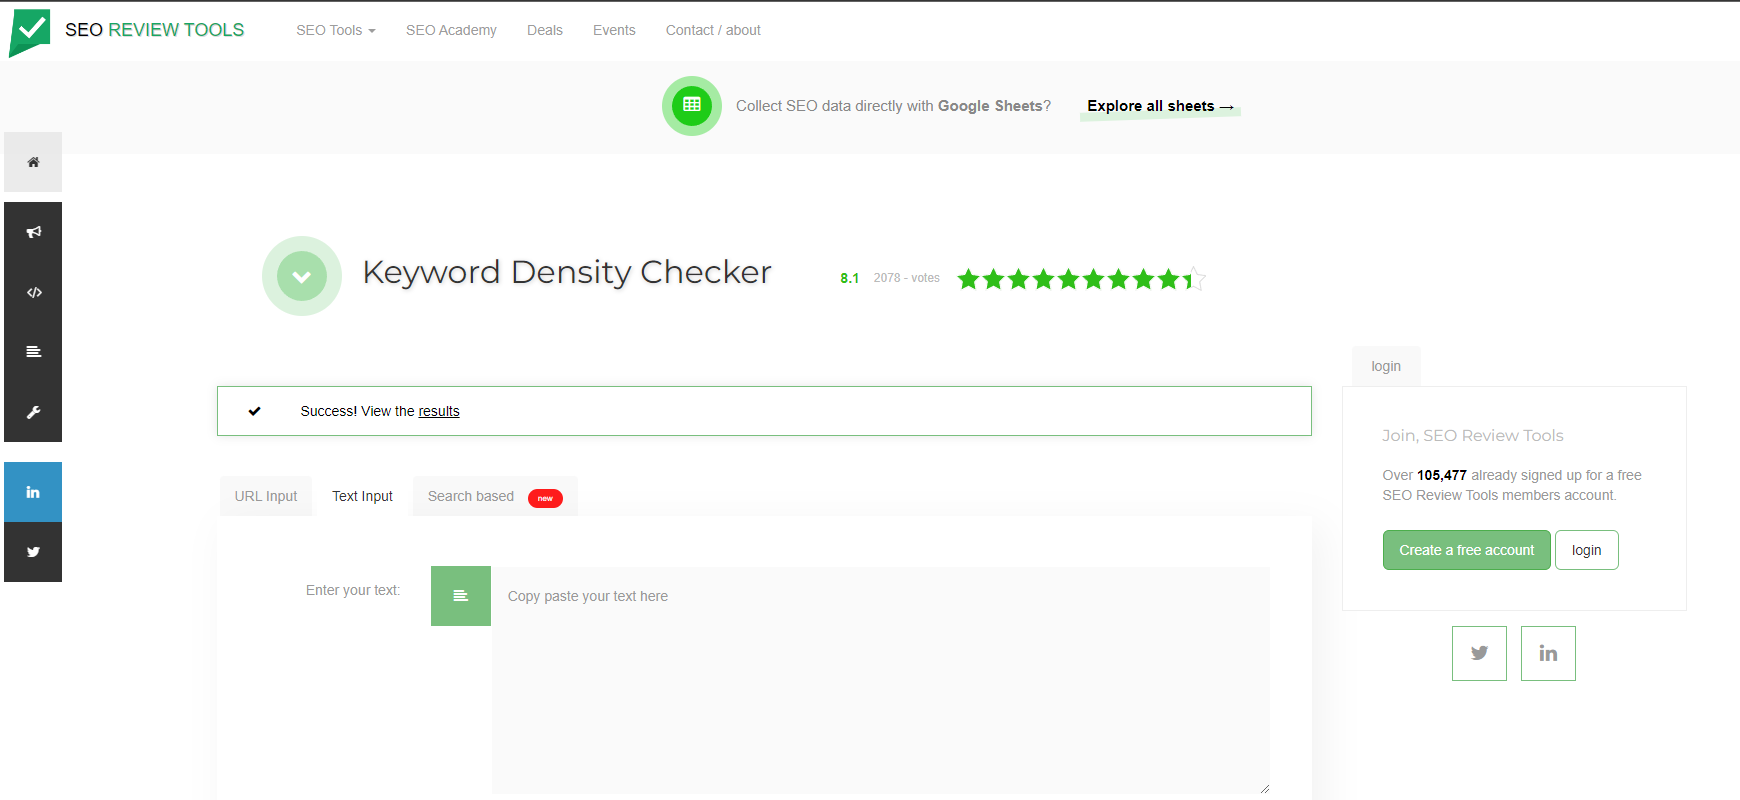 SEO Review Tools Keyword Density Checker homepage